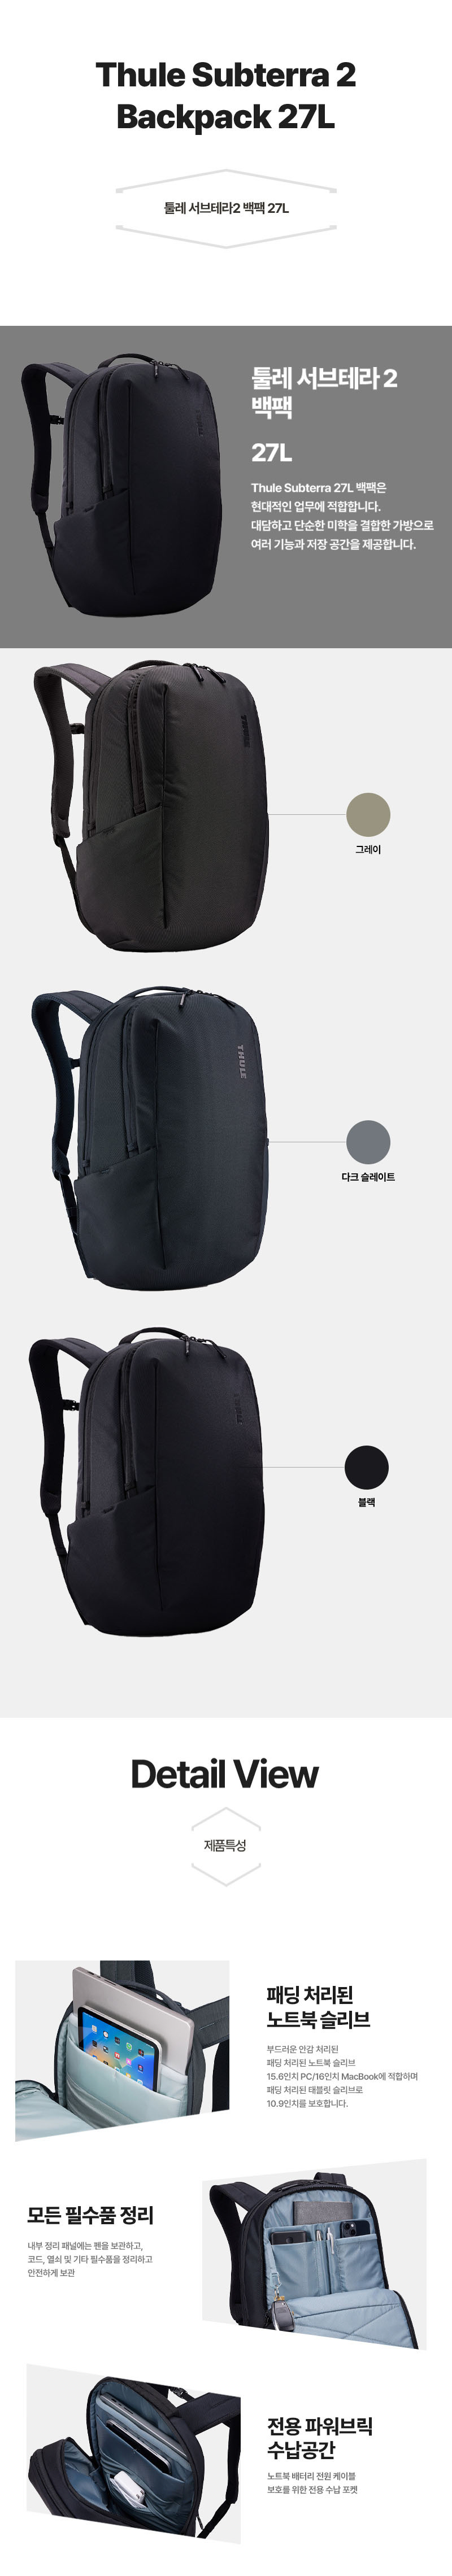 Backpack-27L-01.jpg